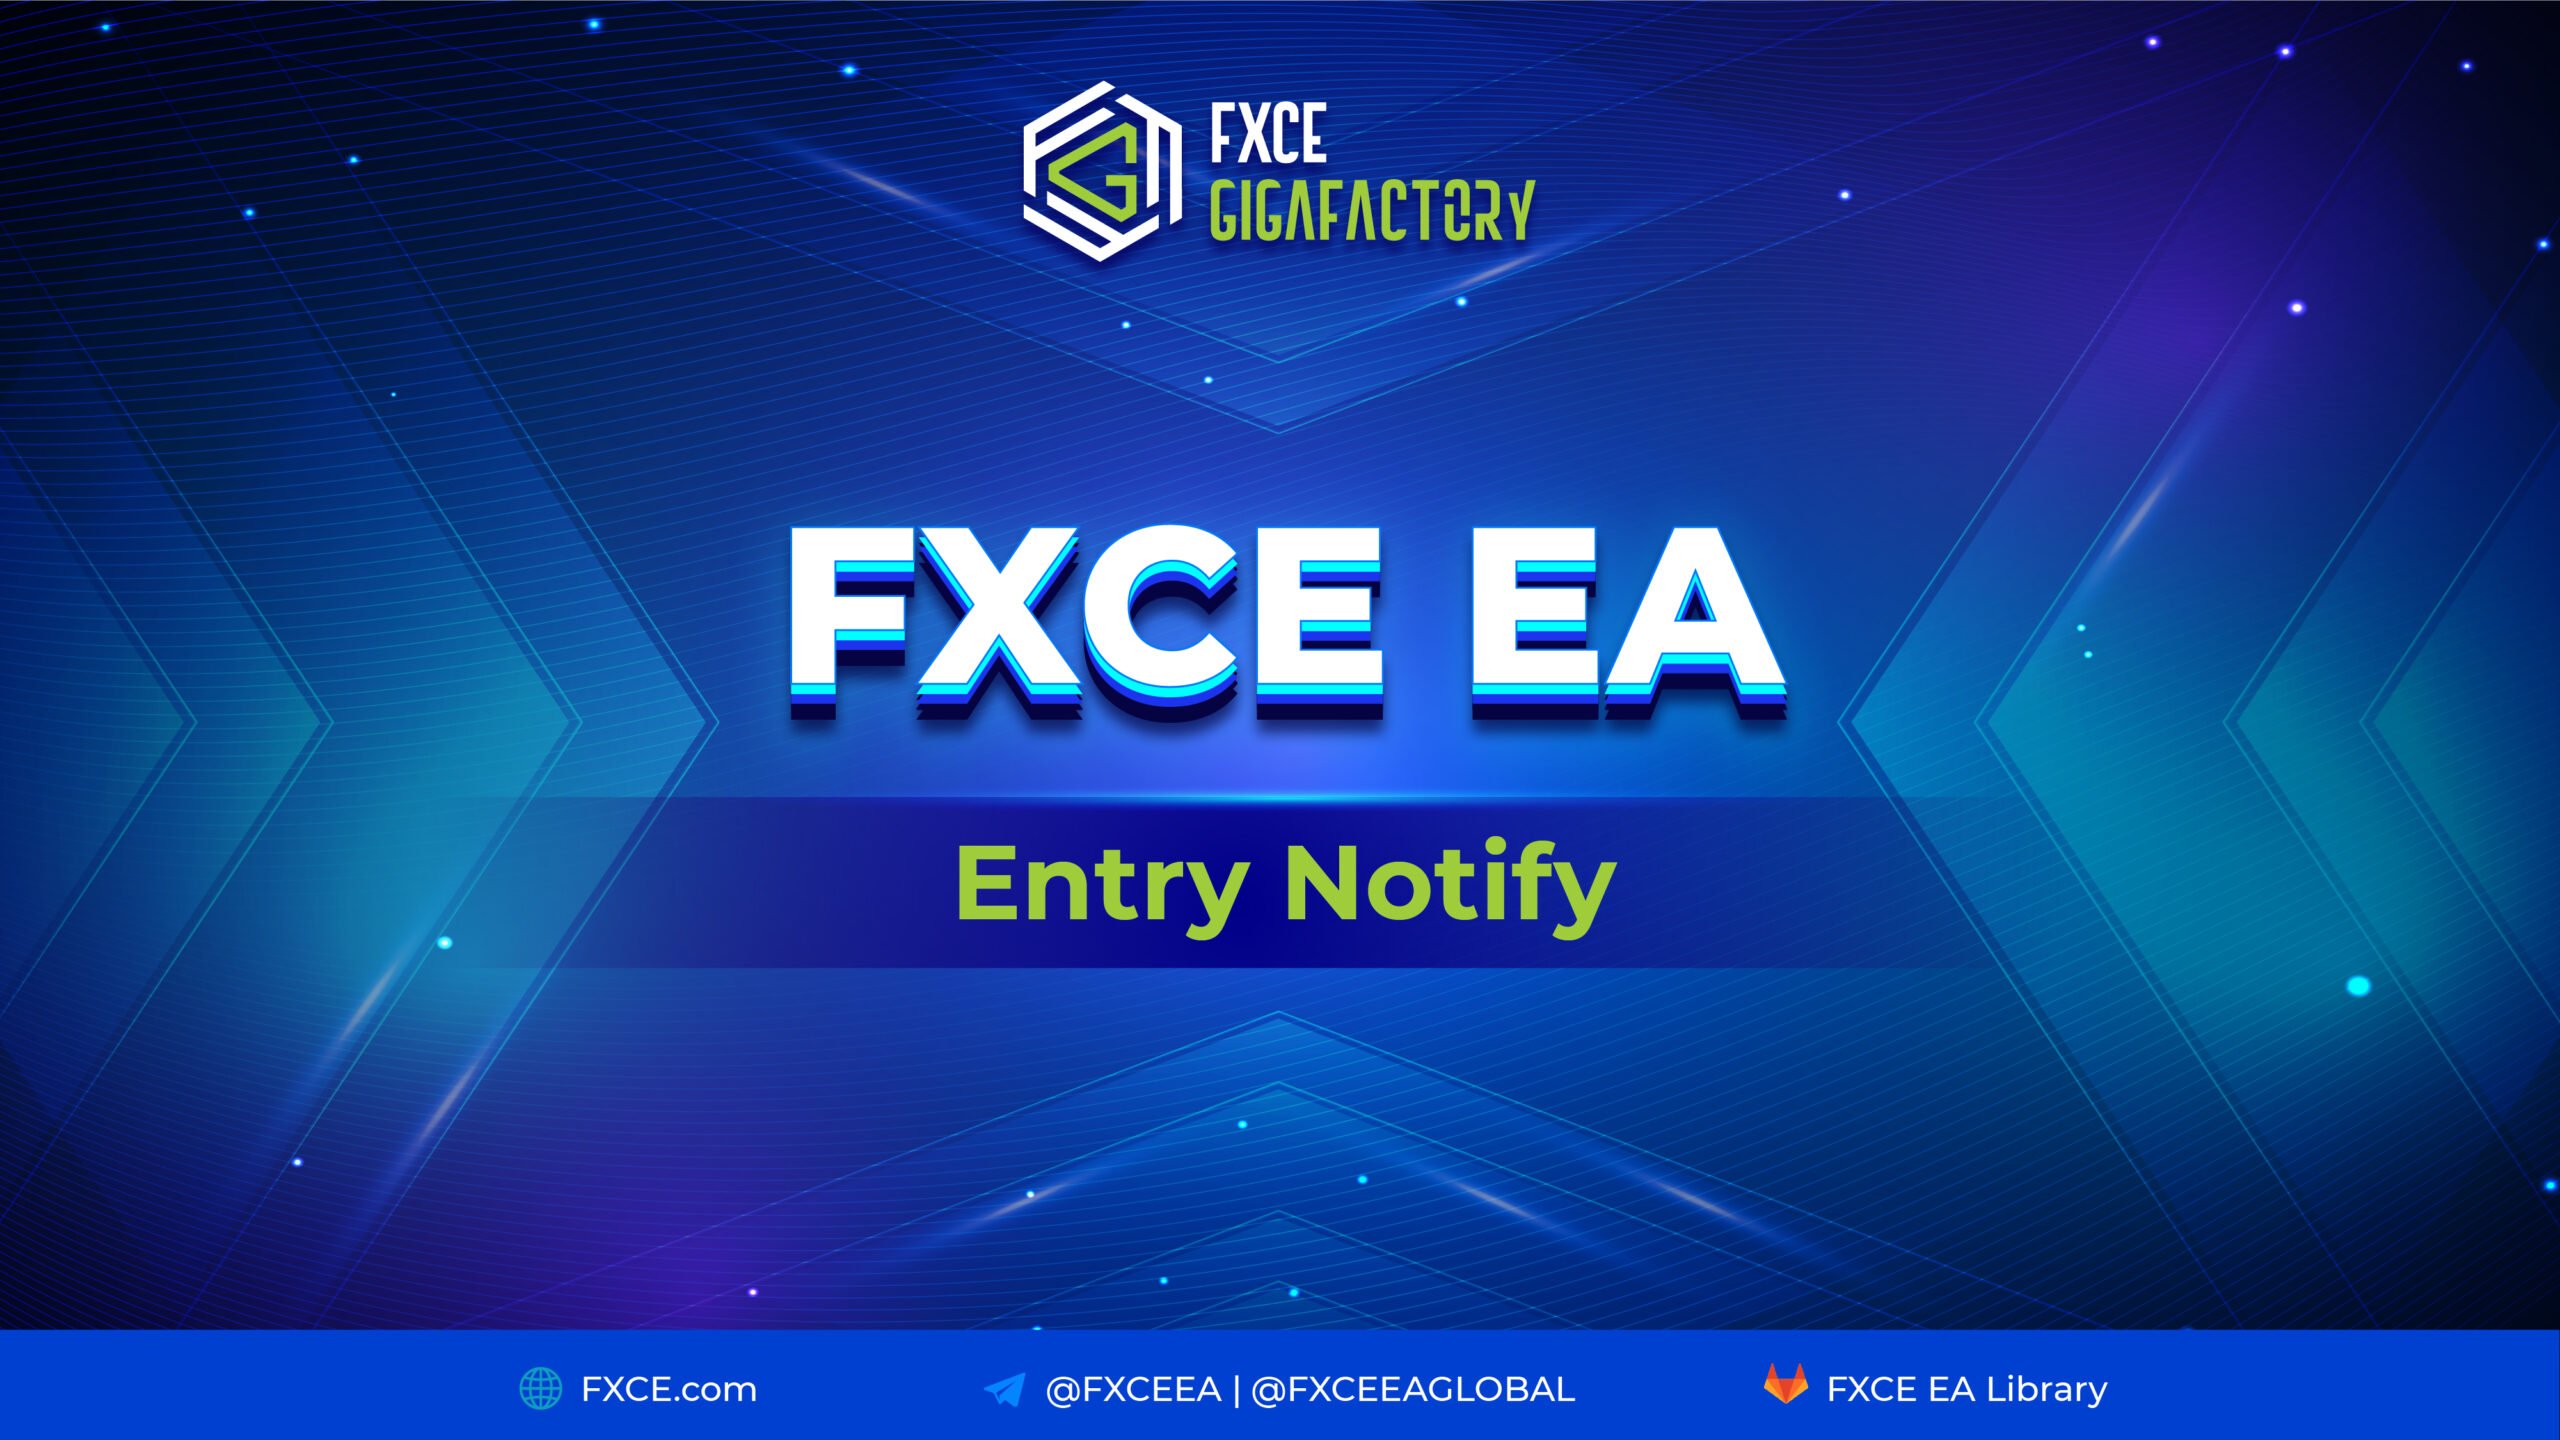 Hướng dẫn sử dụng FXCE EA Entry Notify